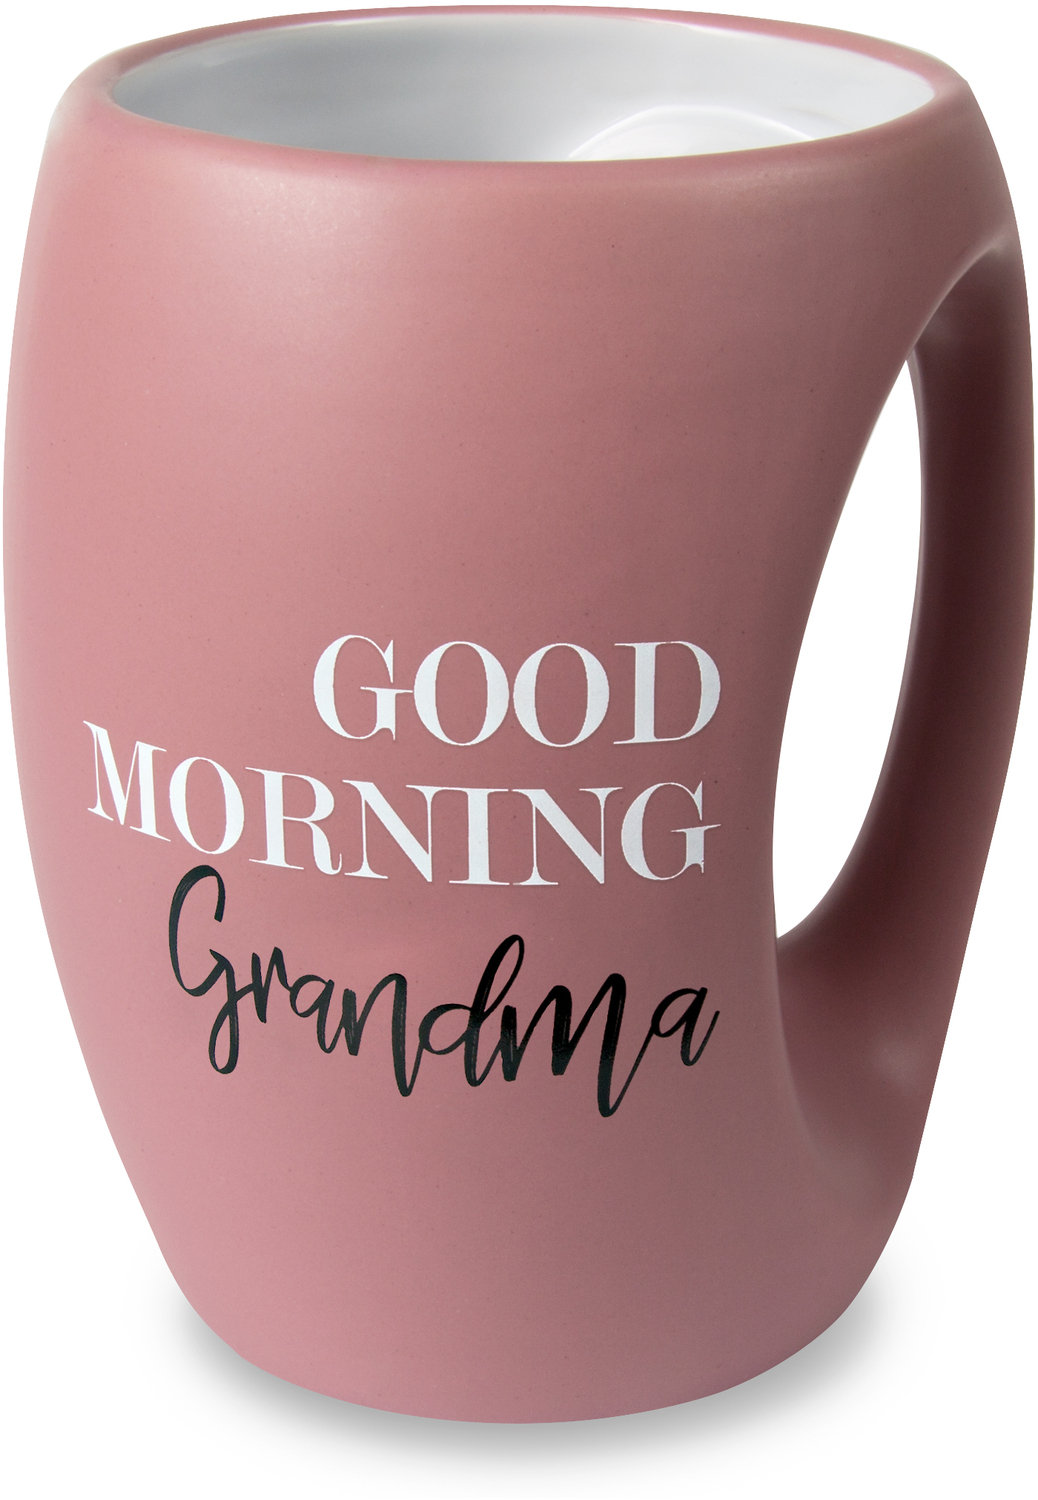 Grandma by Good Morning - Grandma - 16 oz Cup